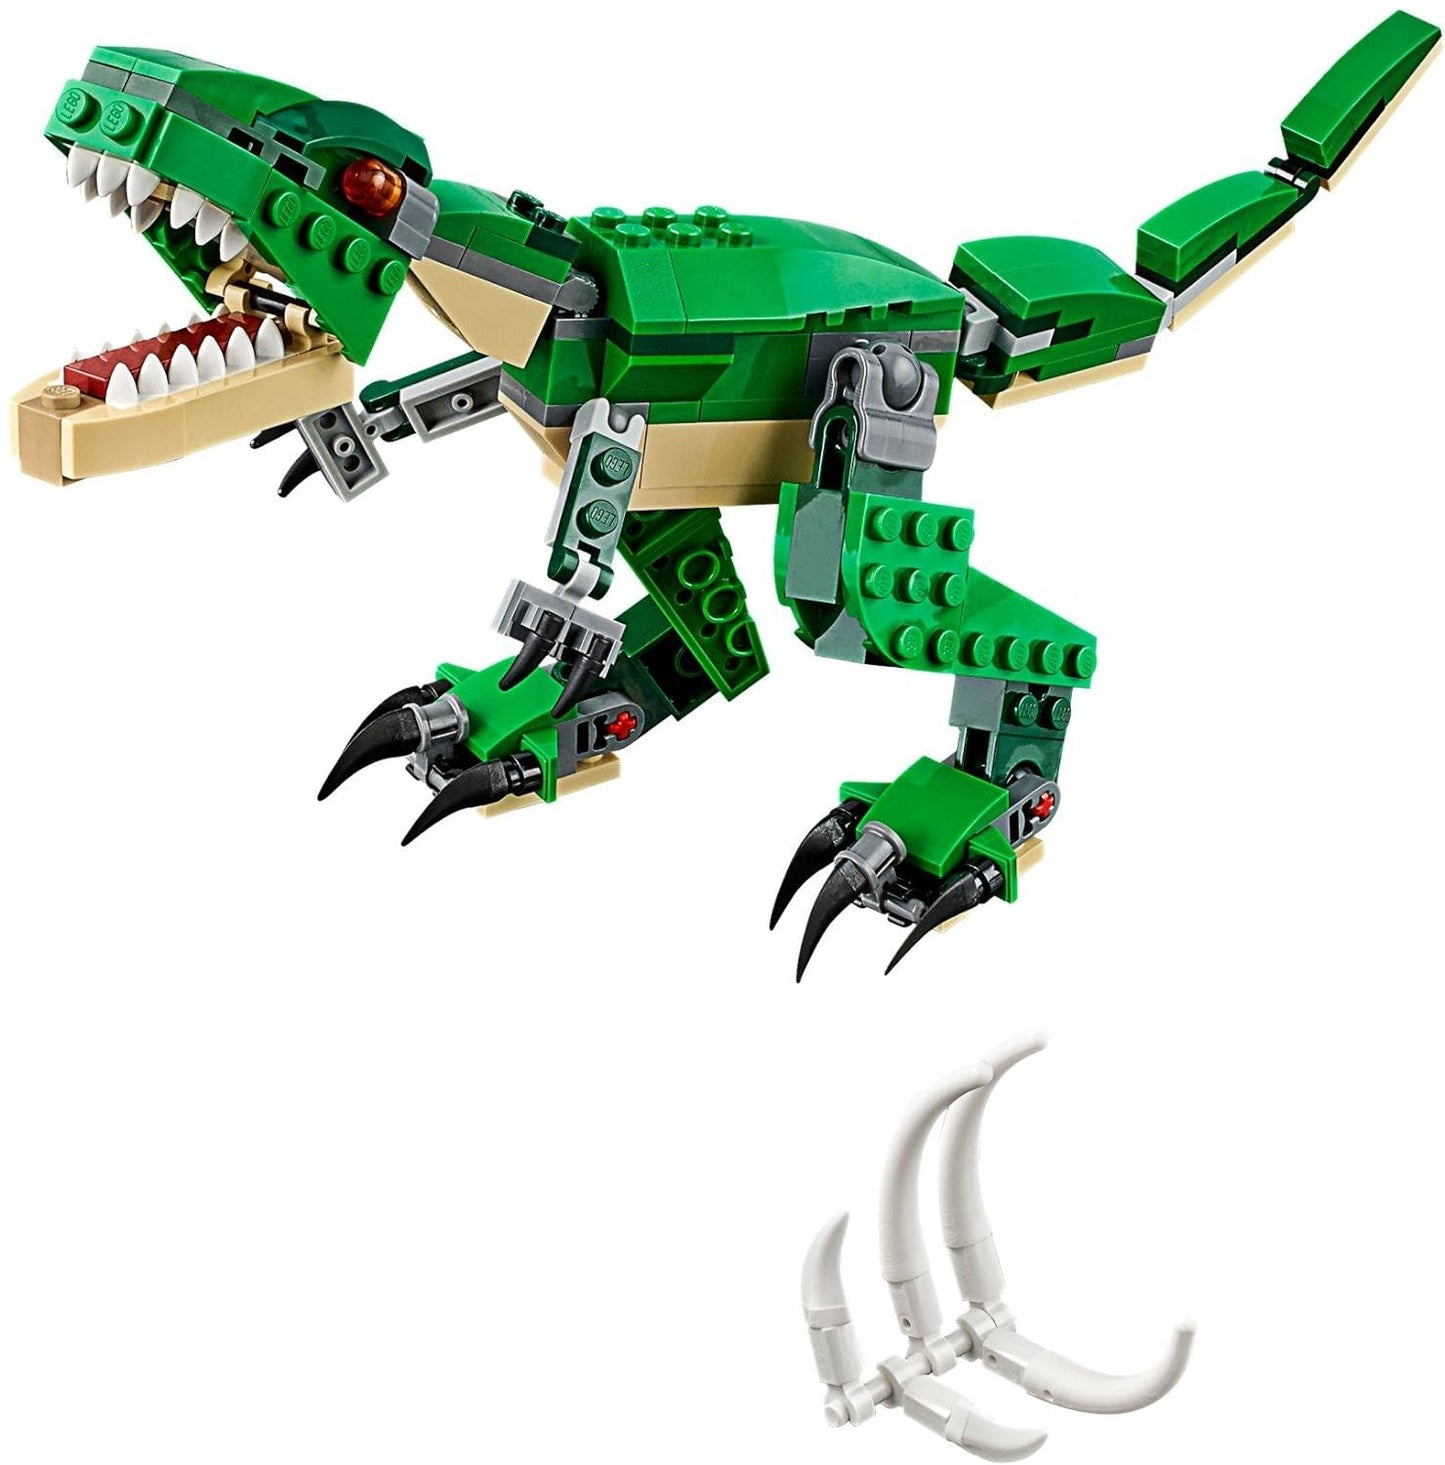 Lego Mighty Dinosaurs Set Jurassic World Animated DVD & Dinosaur Creator Pack - The Indominus Escape Movie & T-Rex Lego building kit bundle